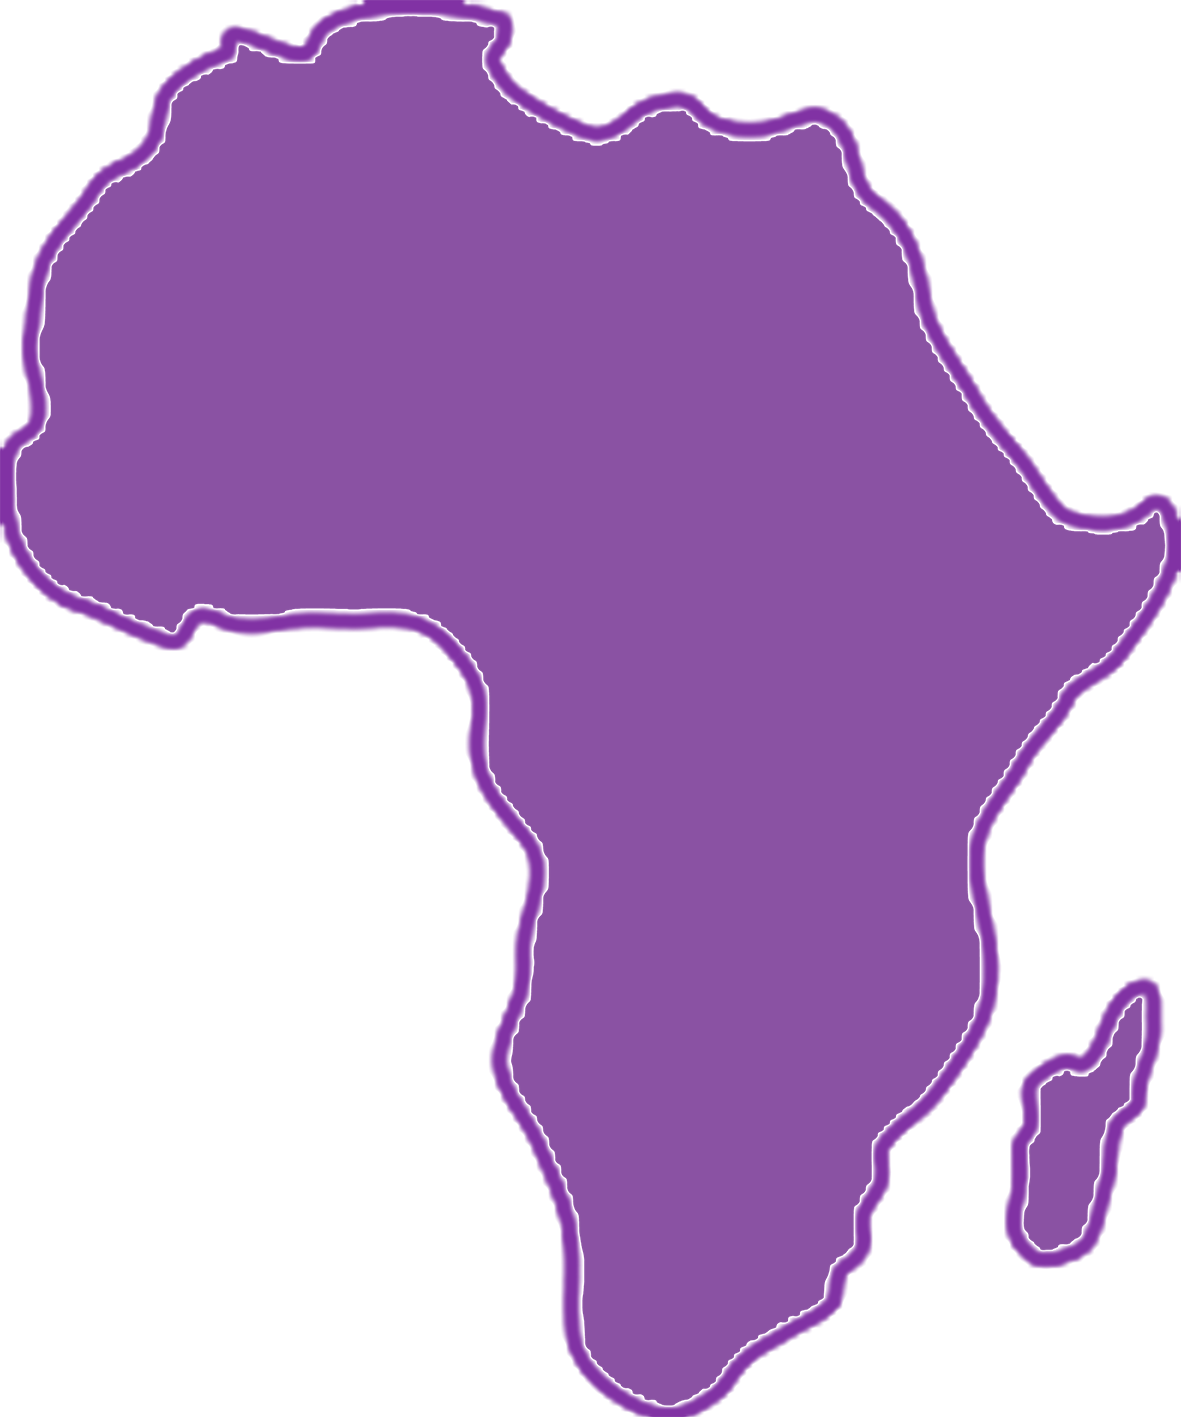 http://www.diasporaafricanforum.org/wp-content/uploads/2022/07/images.png